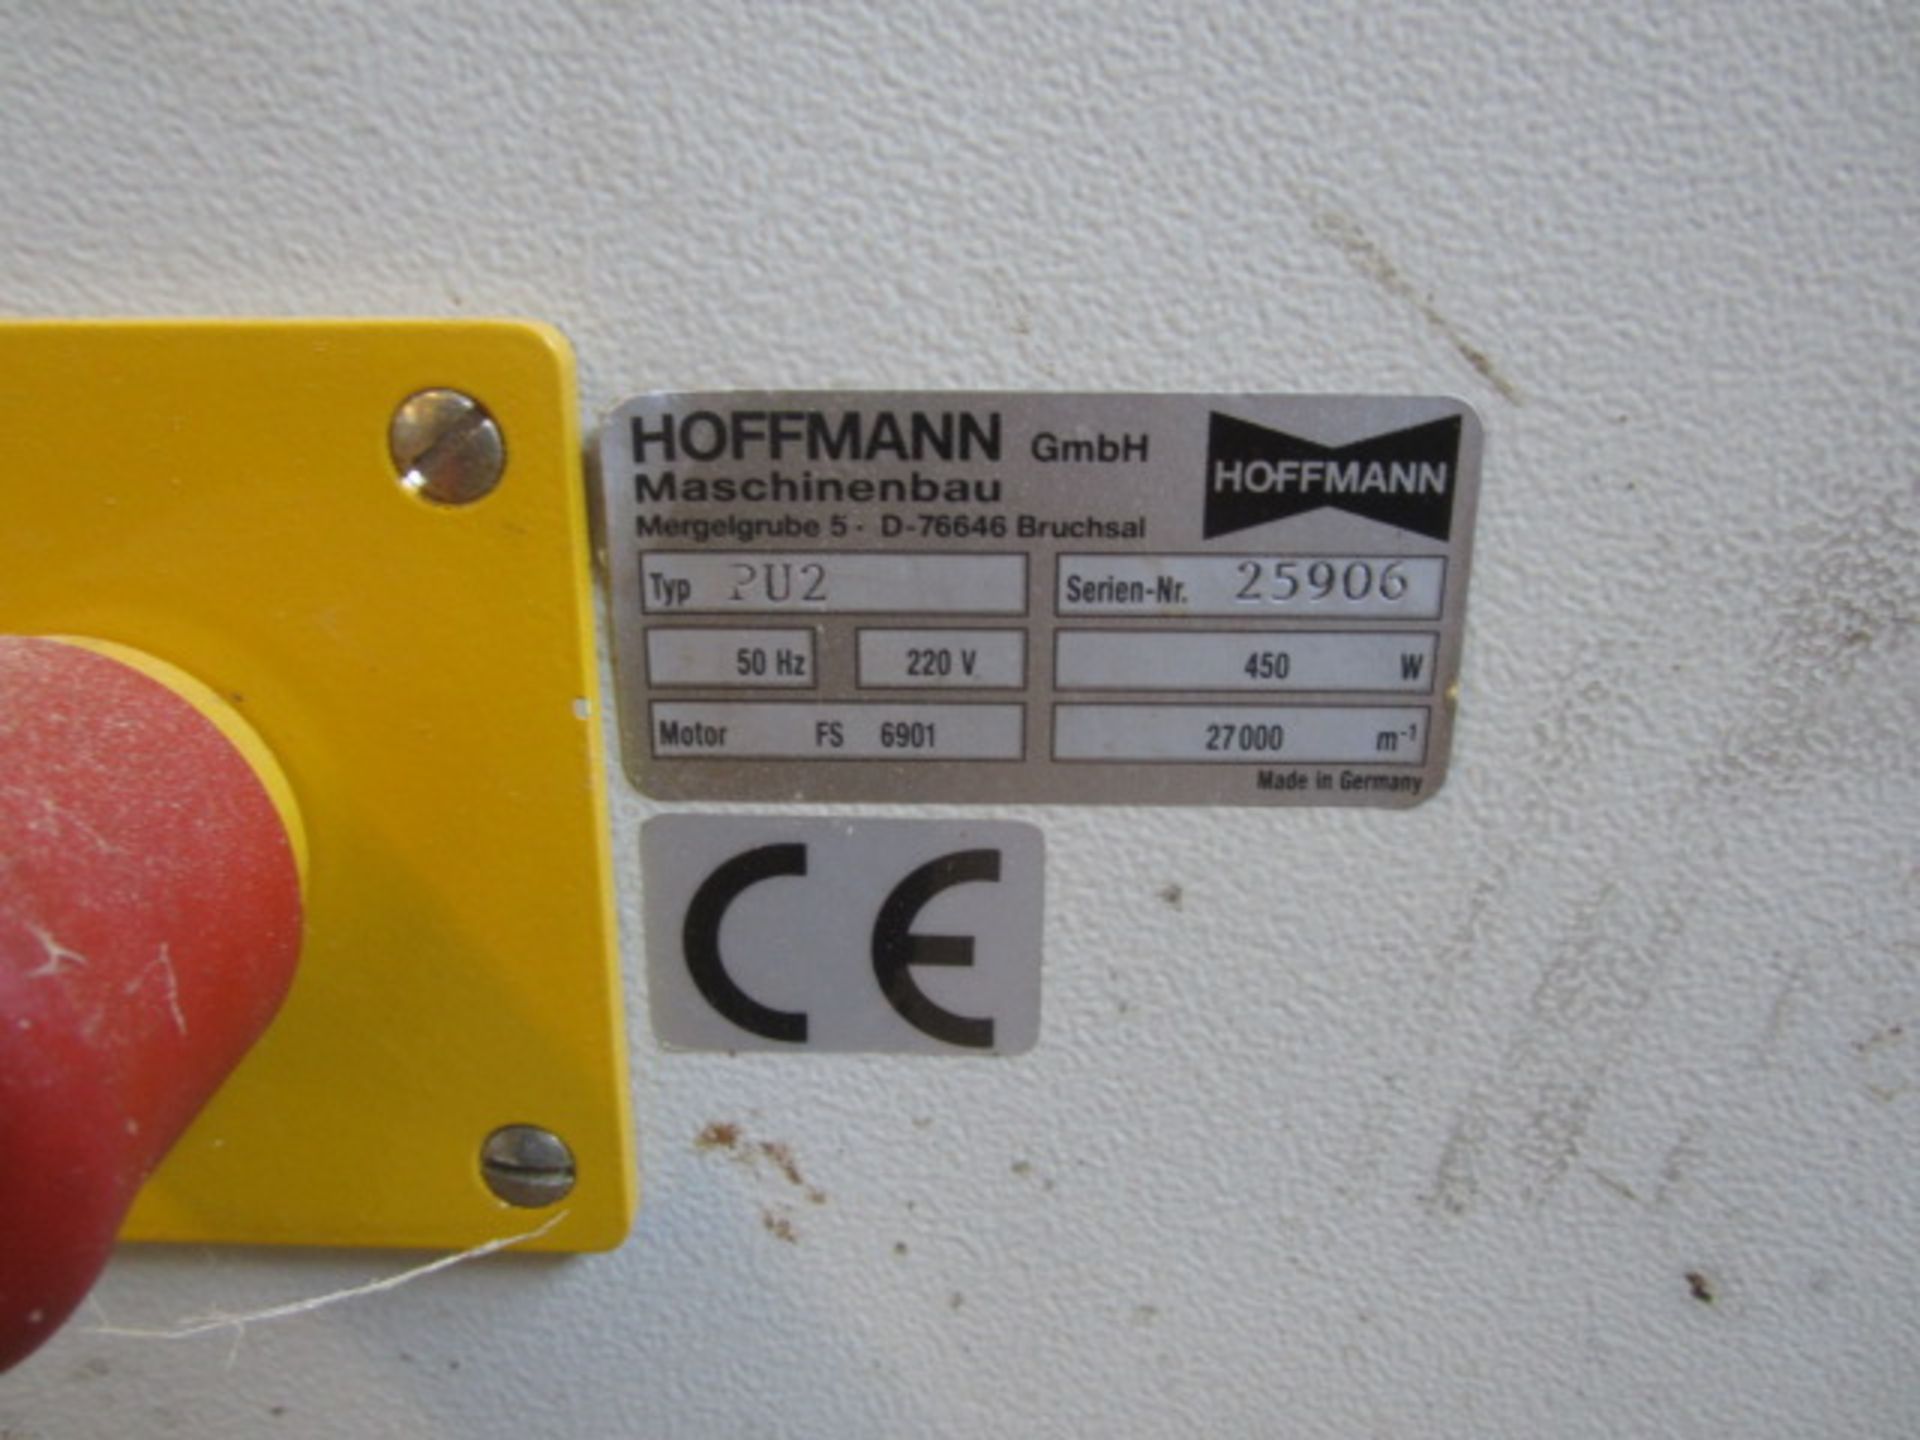 Hoffman edge cutter, type PU2, serial no: 25906, pneumatic clamping - Image 5 of 5